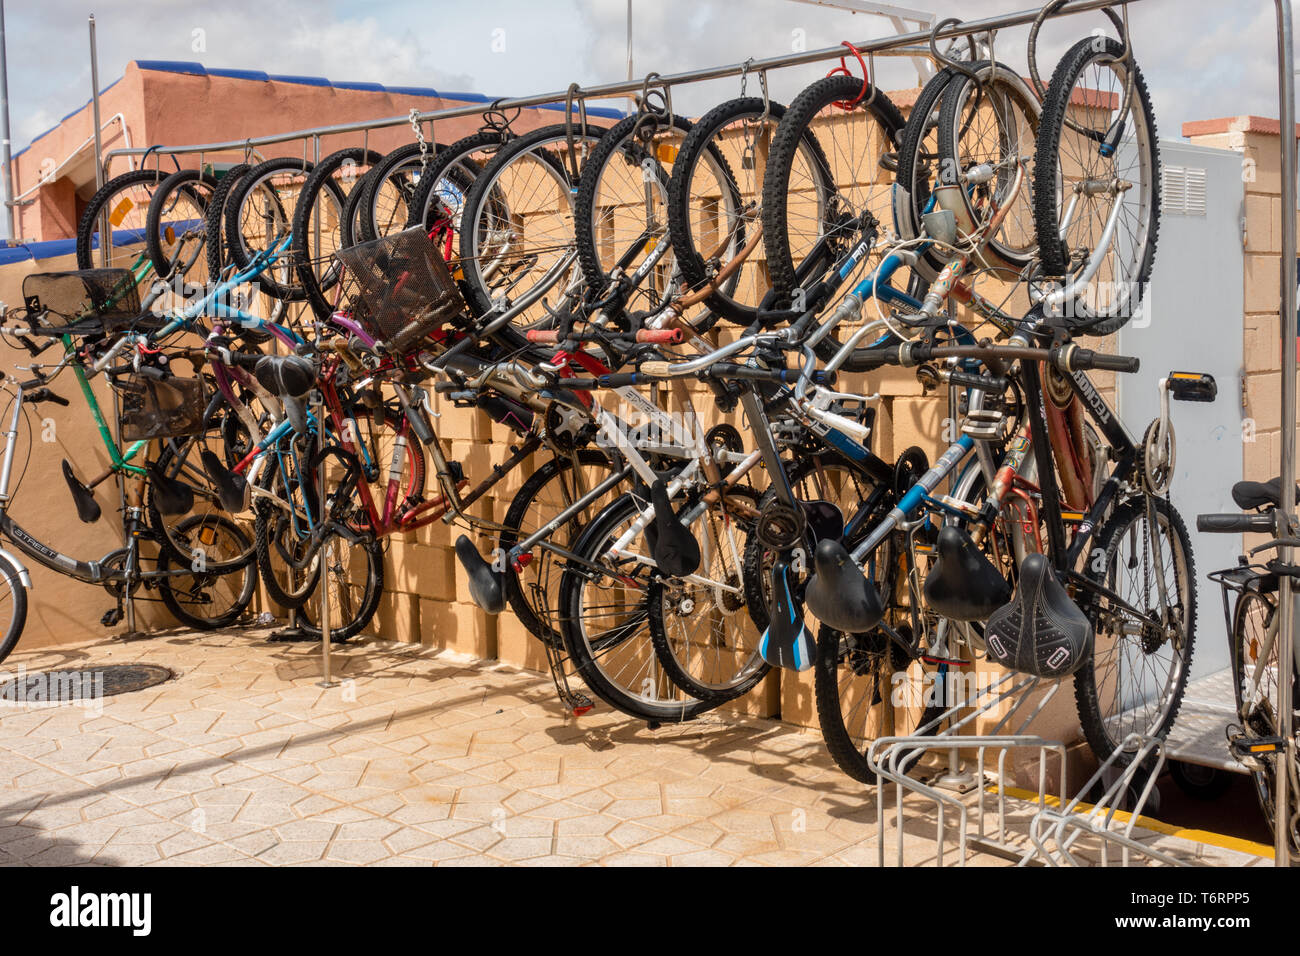 Bike rack full of bikes Stock Photo